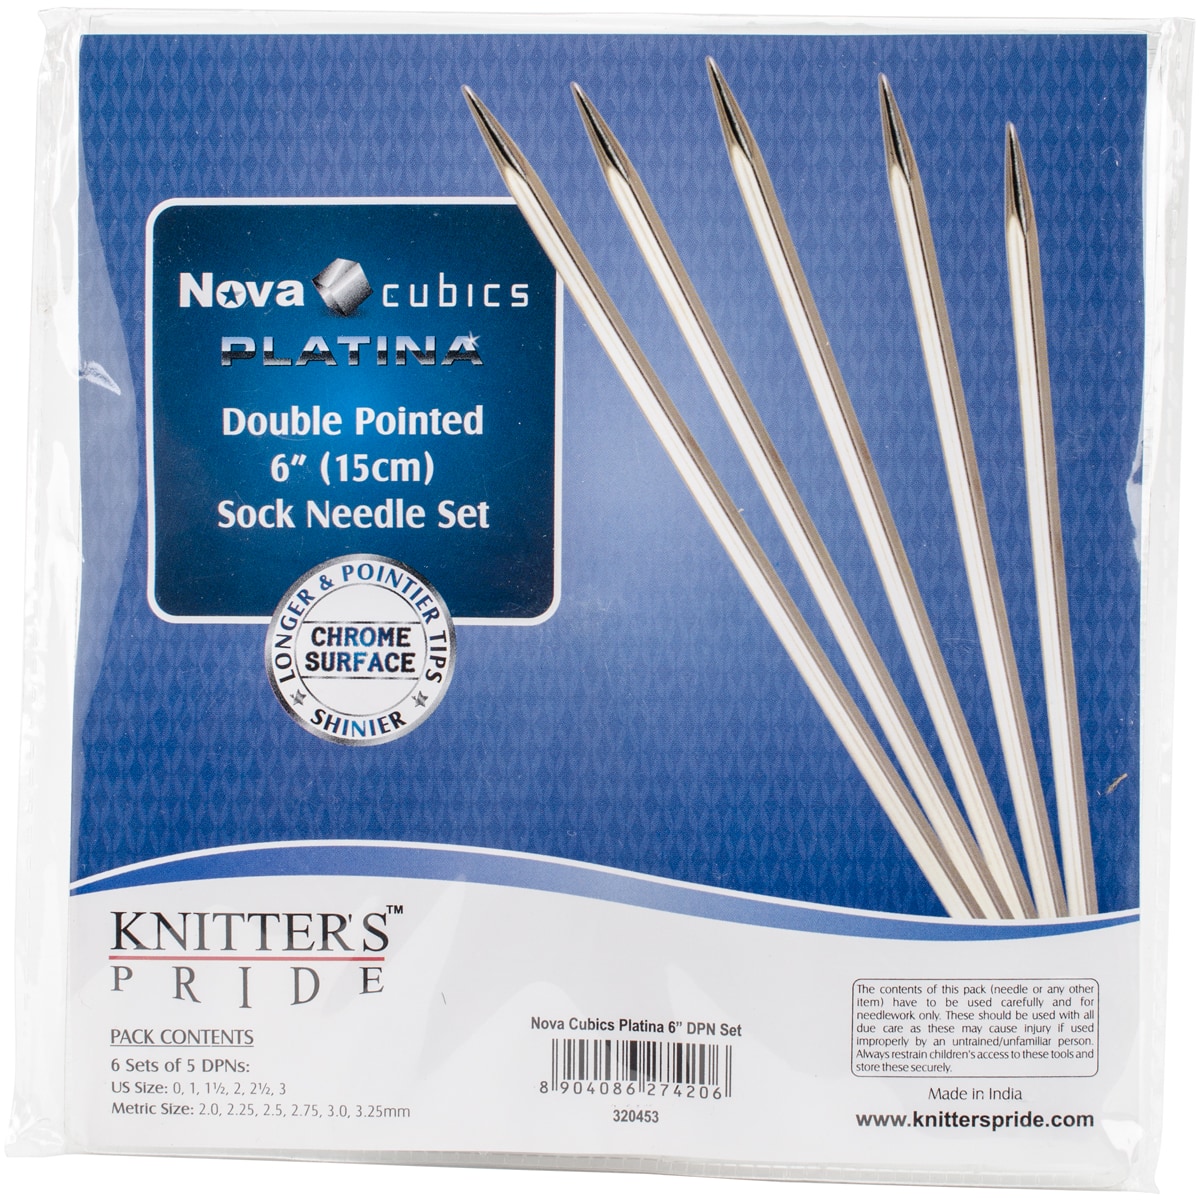 Knitters Pride™ Nova Cubics Platina Socks Kit 6 Double Pointed Needles Set Double Pointed